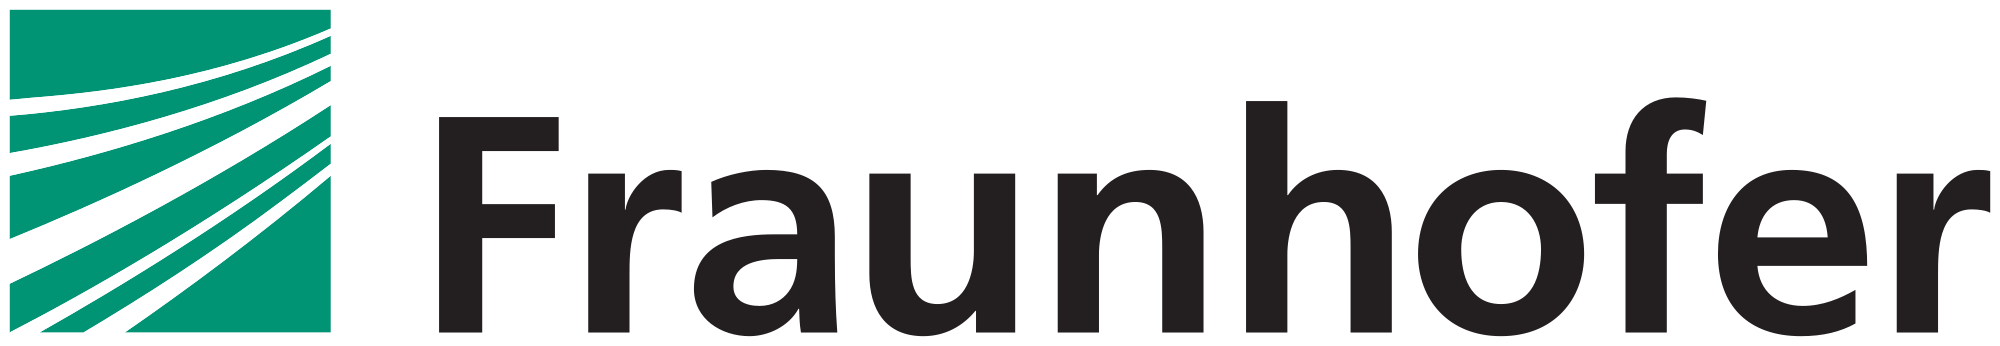 300px-Fraunhofer-logo.png